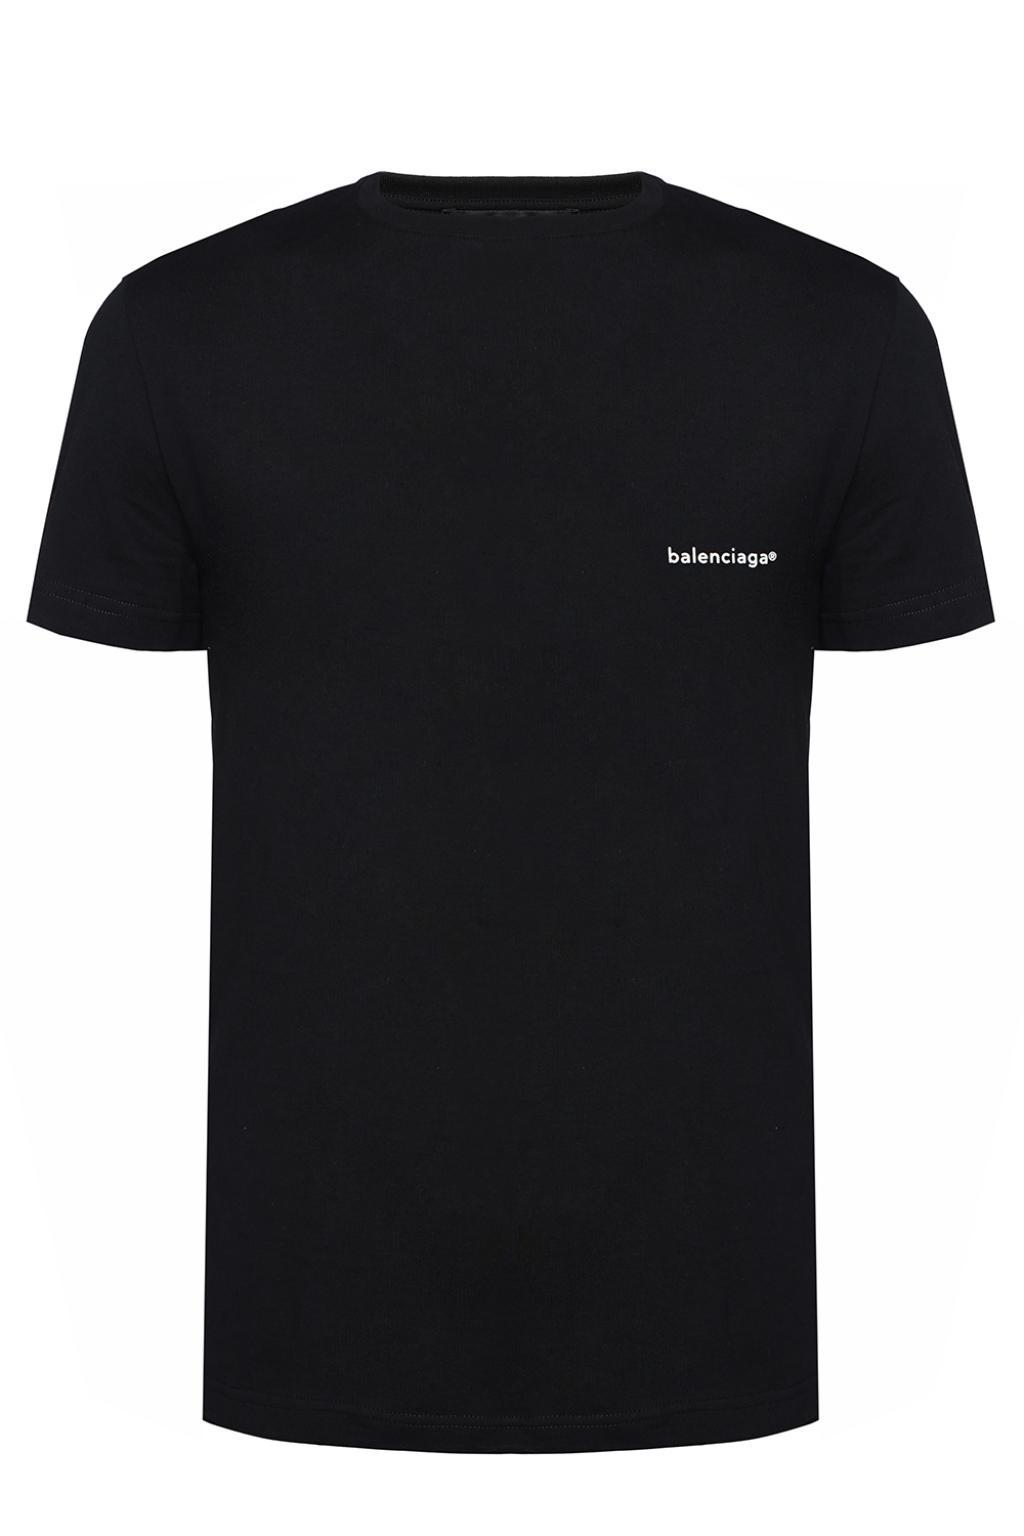 Balenciaga Black Logo T Shirt Shop, SAVE 35% - www.senseofkrabi.com